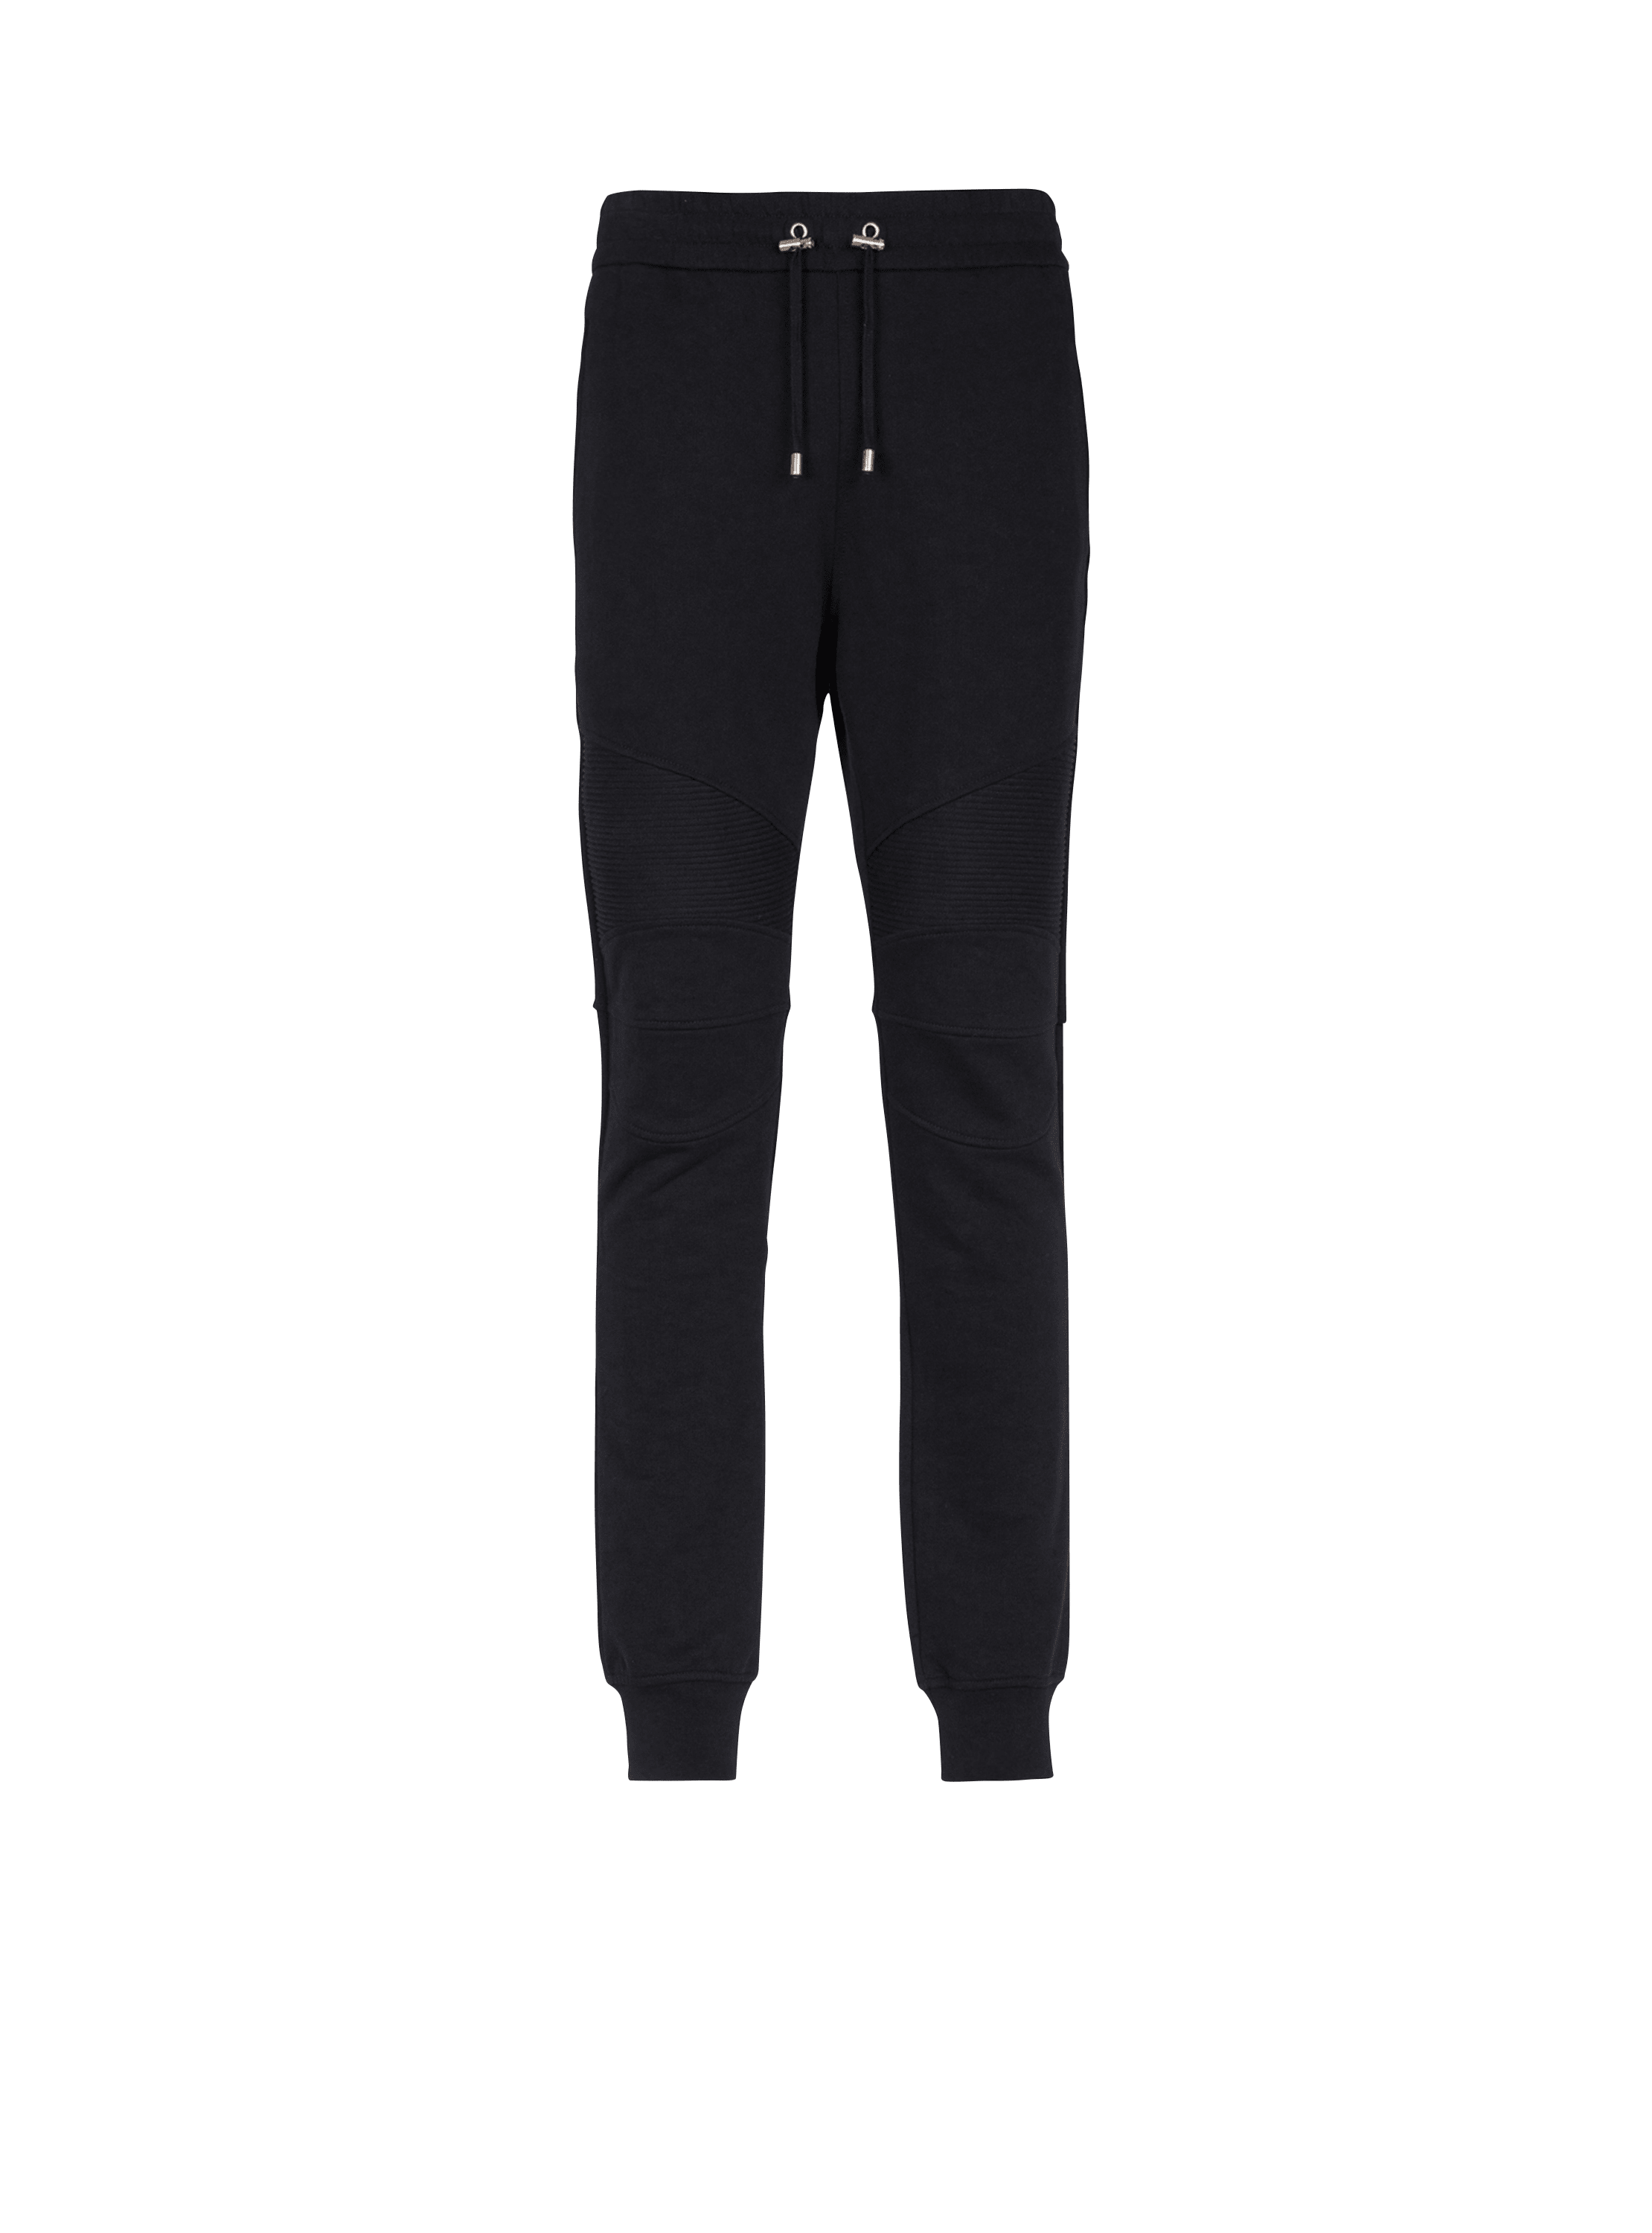 Balmain - Black Cotton Track Pants